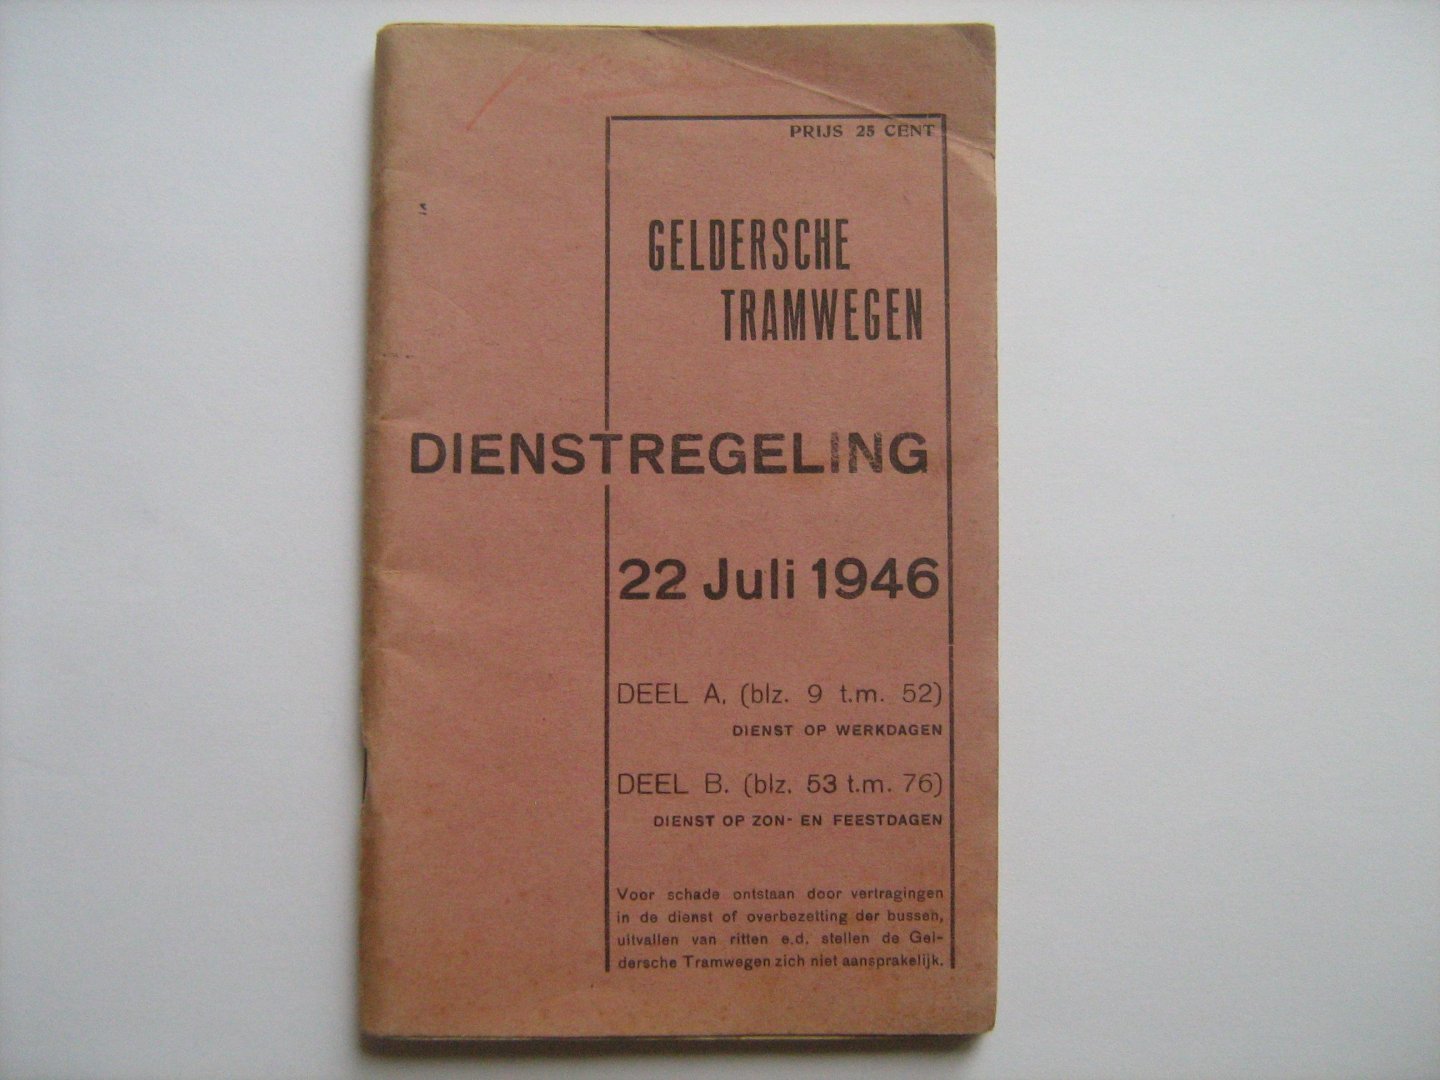  - Geldersche Tramwegen Doetinchem,dienstregeling 22 juli 1946